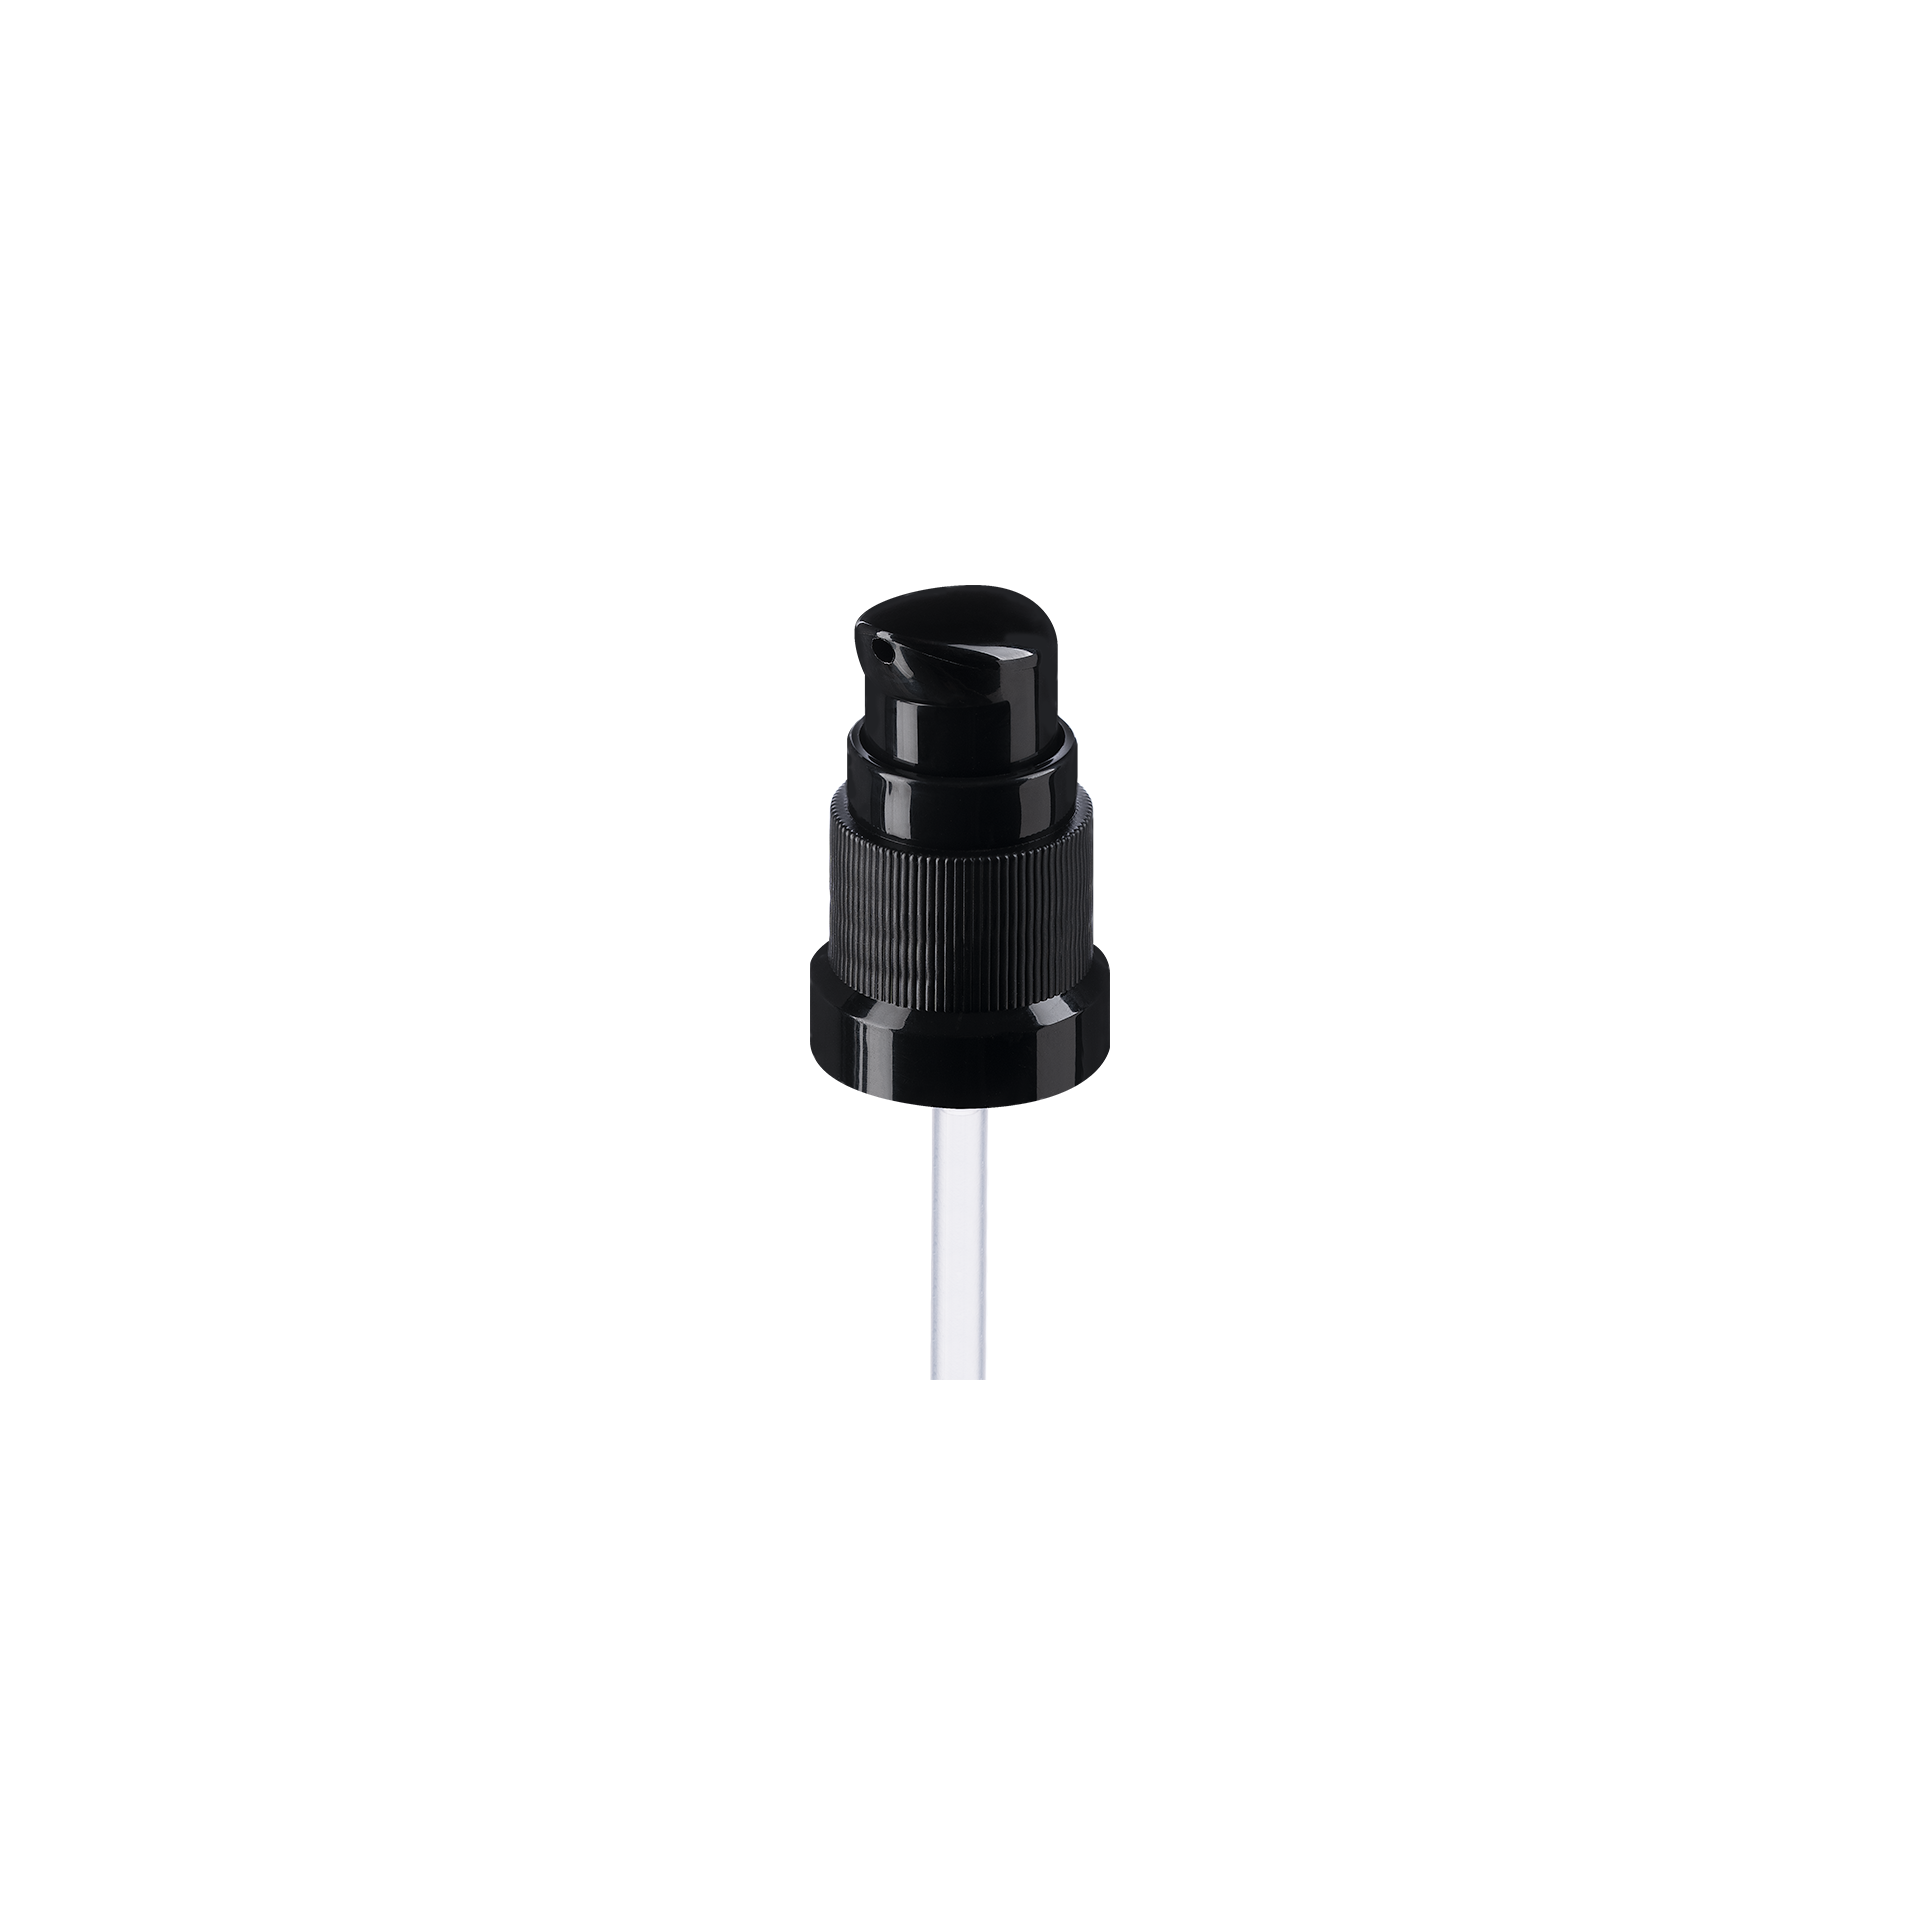 Lotion pump Metropolitan DIN18, PP, black, dose 0.15ml, black security clip (Jasmine 30)